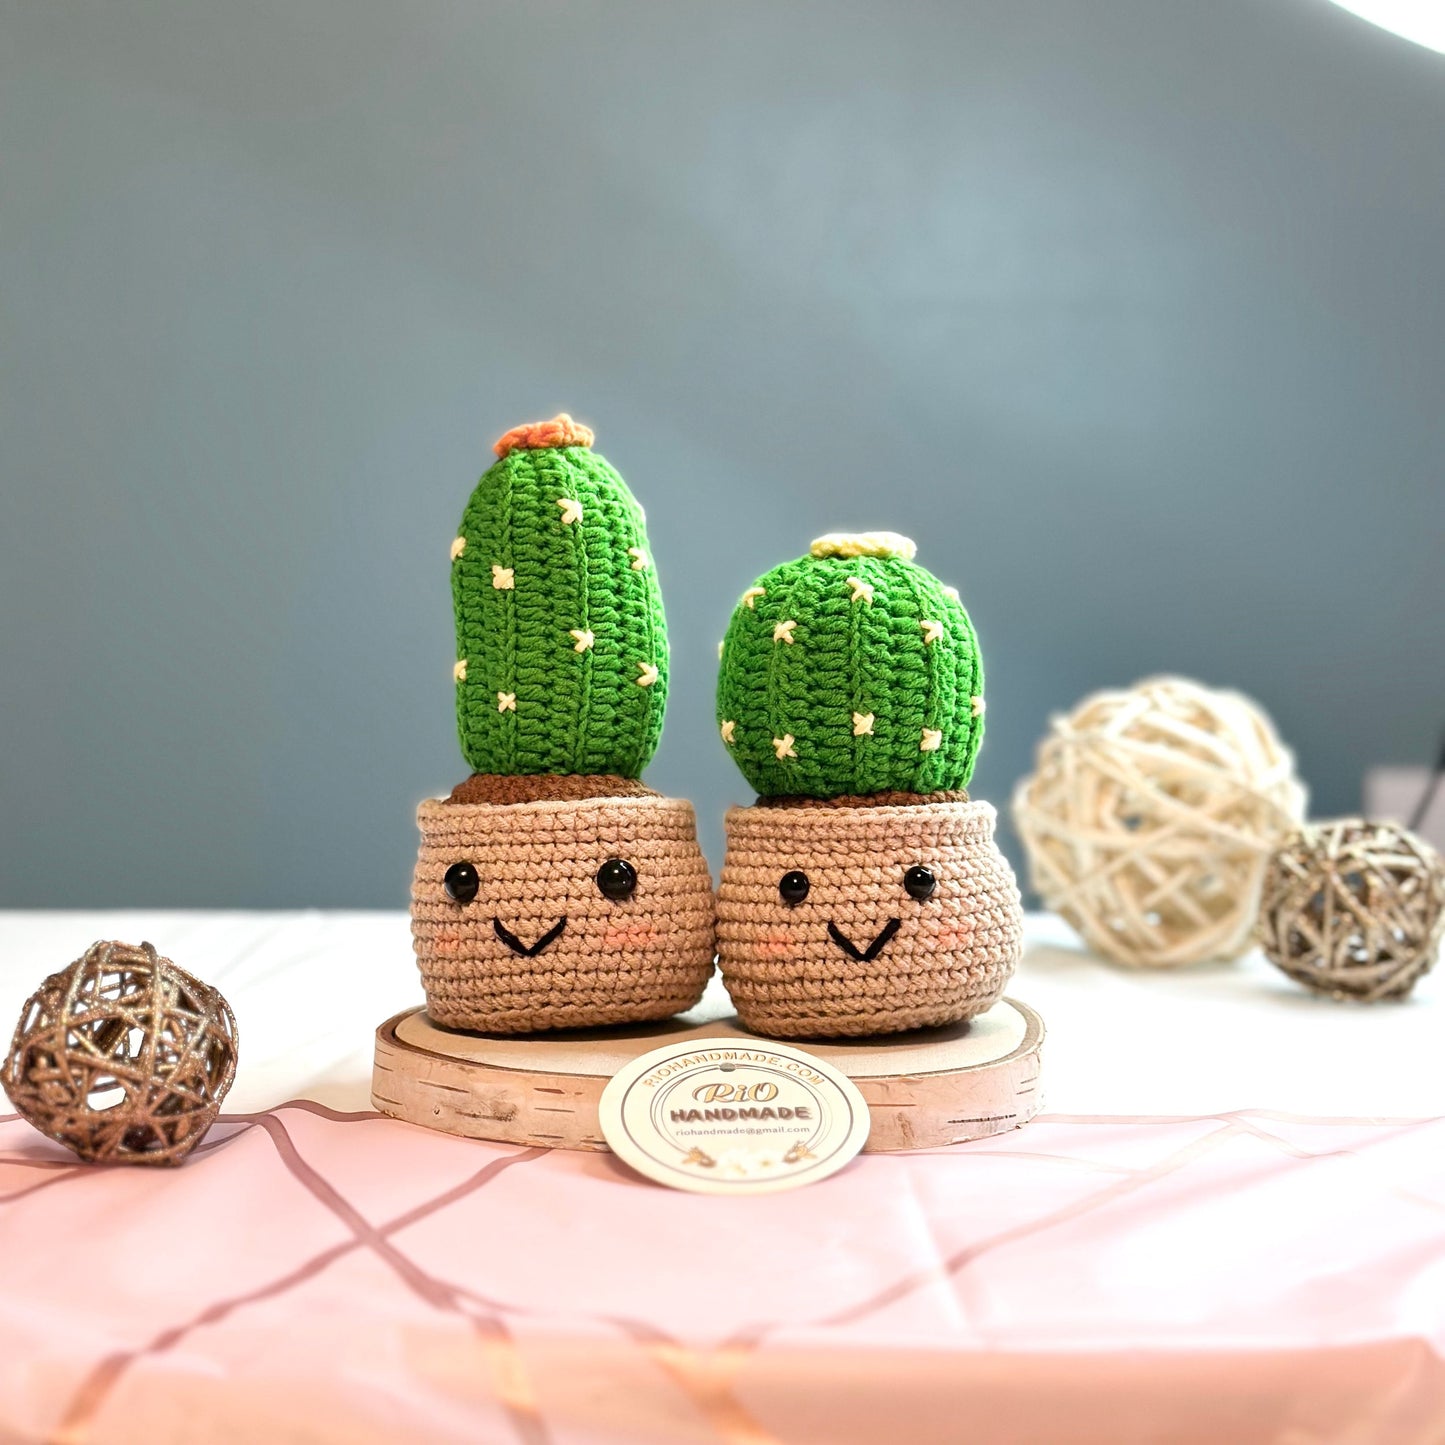 Ready To Ship, Handmade Cactus Gift, Crochet Cactus, Amigurumi Cactus, Faux Plant, Cactus Decor, Potted Cactus